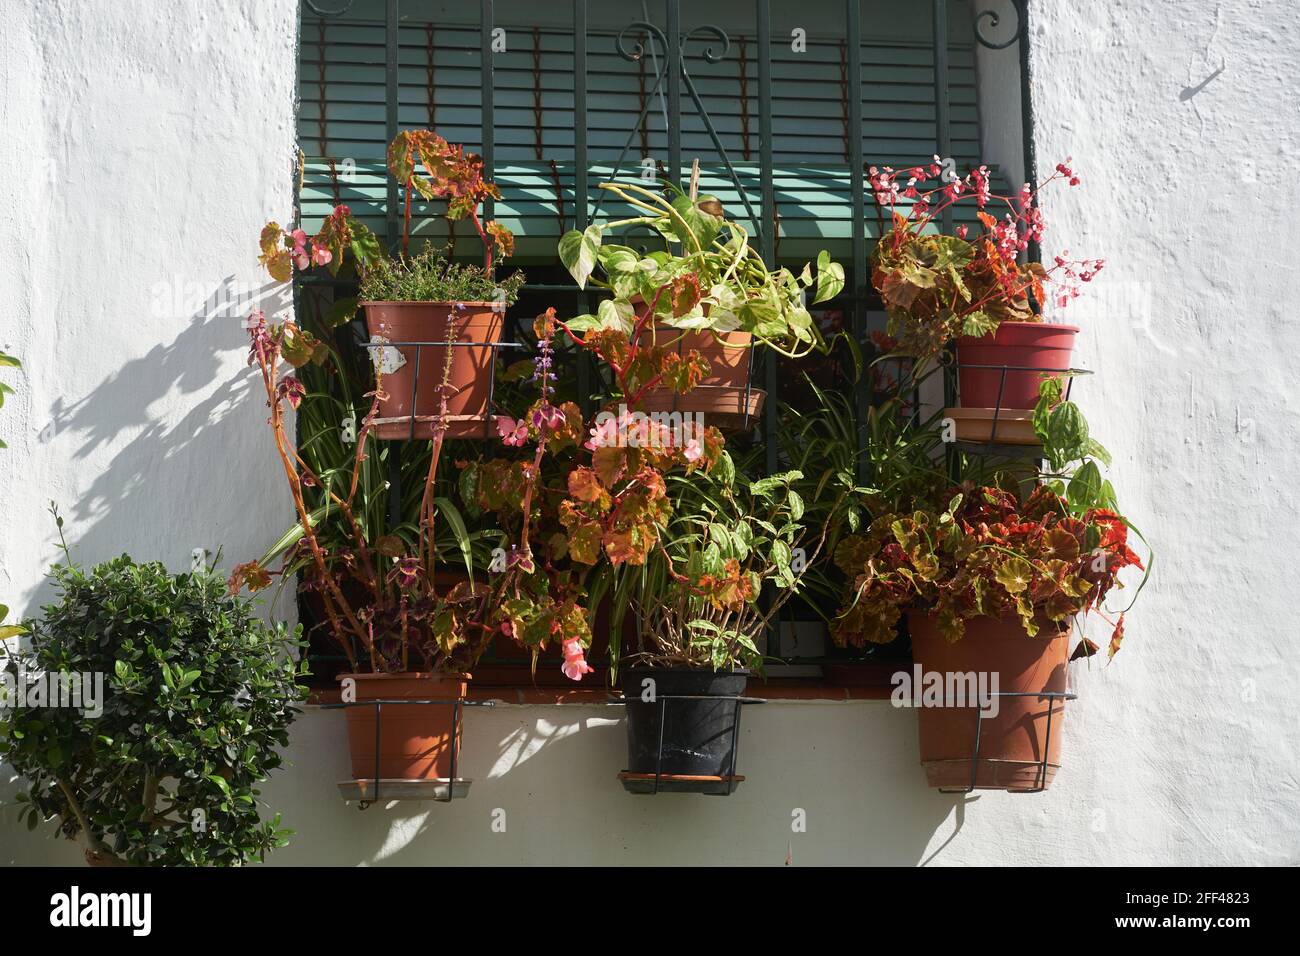 Plants decorating a wrought iron window in Benalmadena Pueblo, Malaga province, Andalusia, Spain. Stock Photo